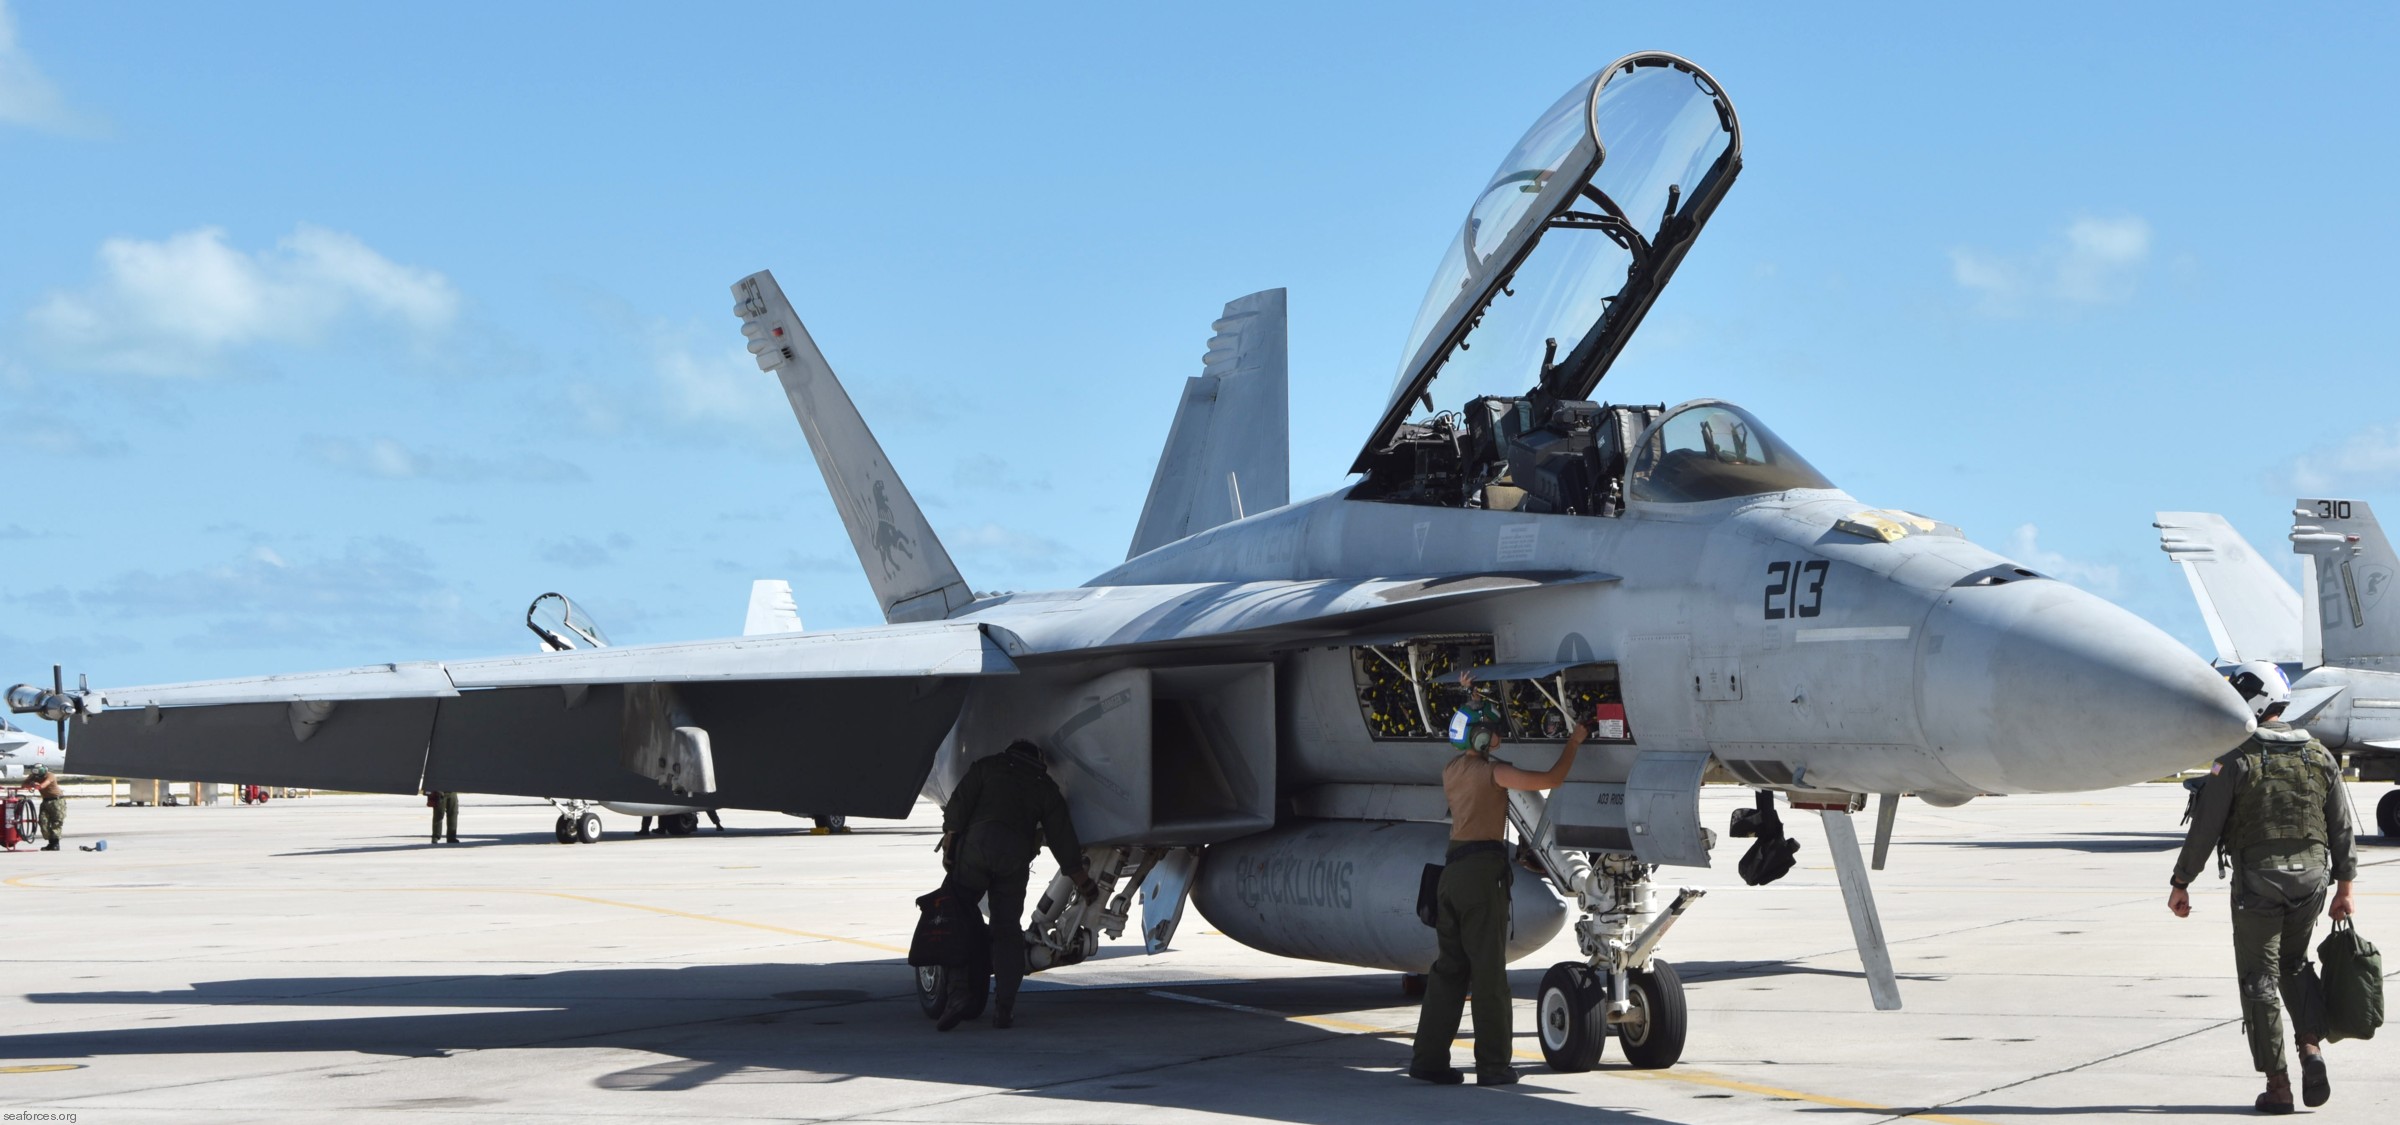 vfa-213 black lions strike fighter squadron us navy f/a-18f super hornet nas key west florida 08